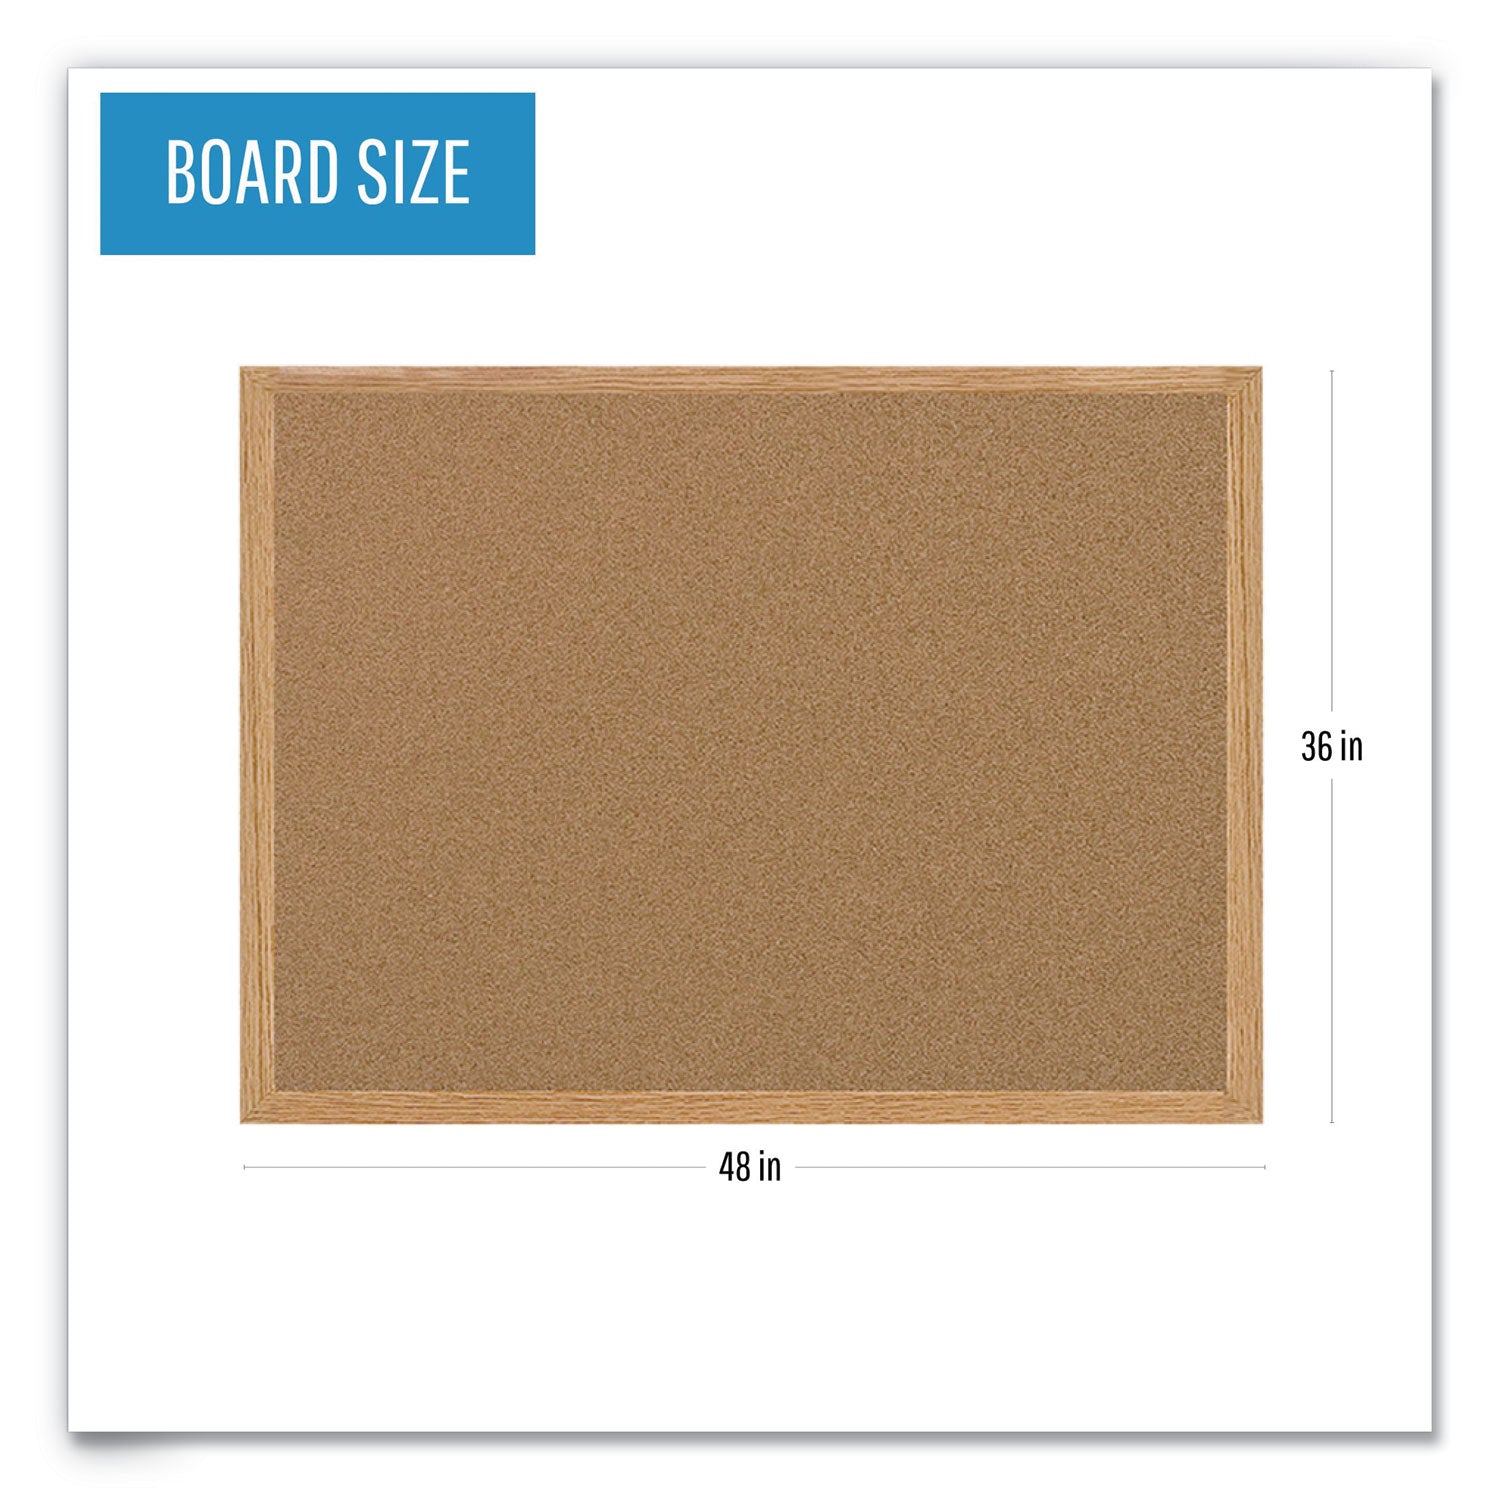 Earth Cork Board, 48 x 36, Tan Surface, Oak Wood Frame - 2